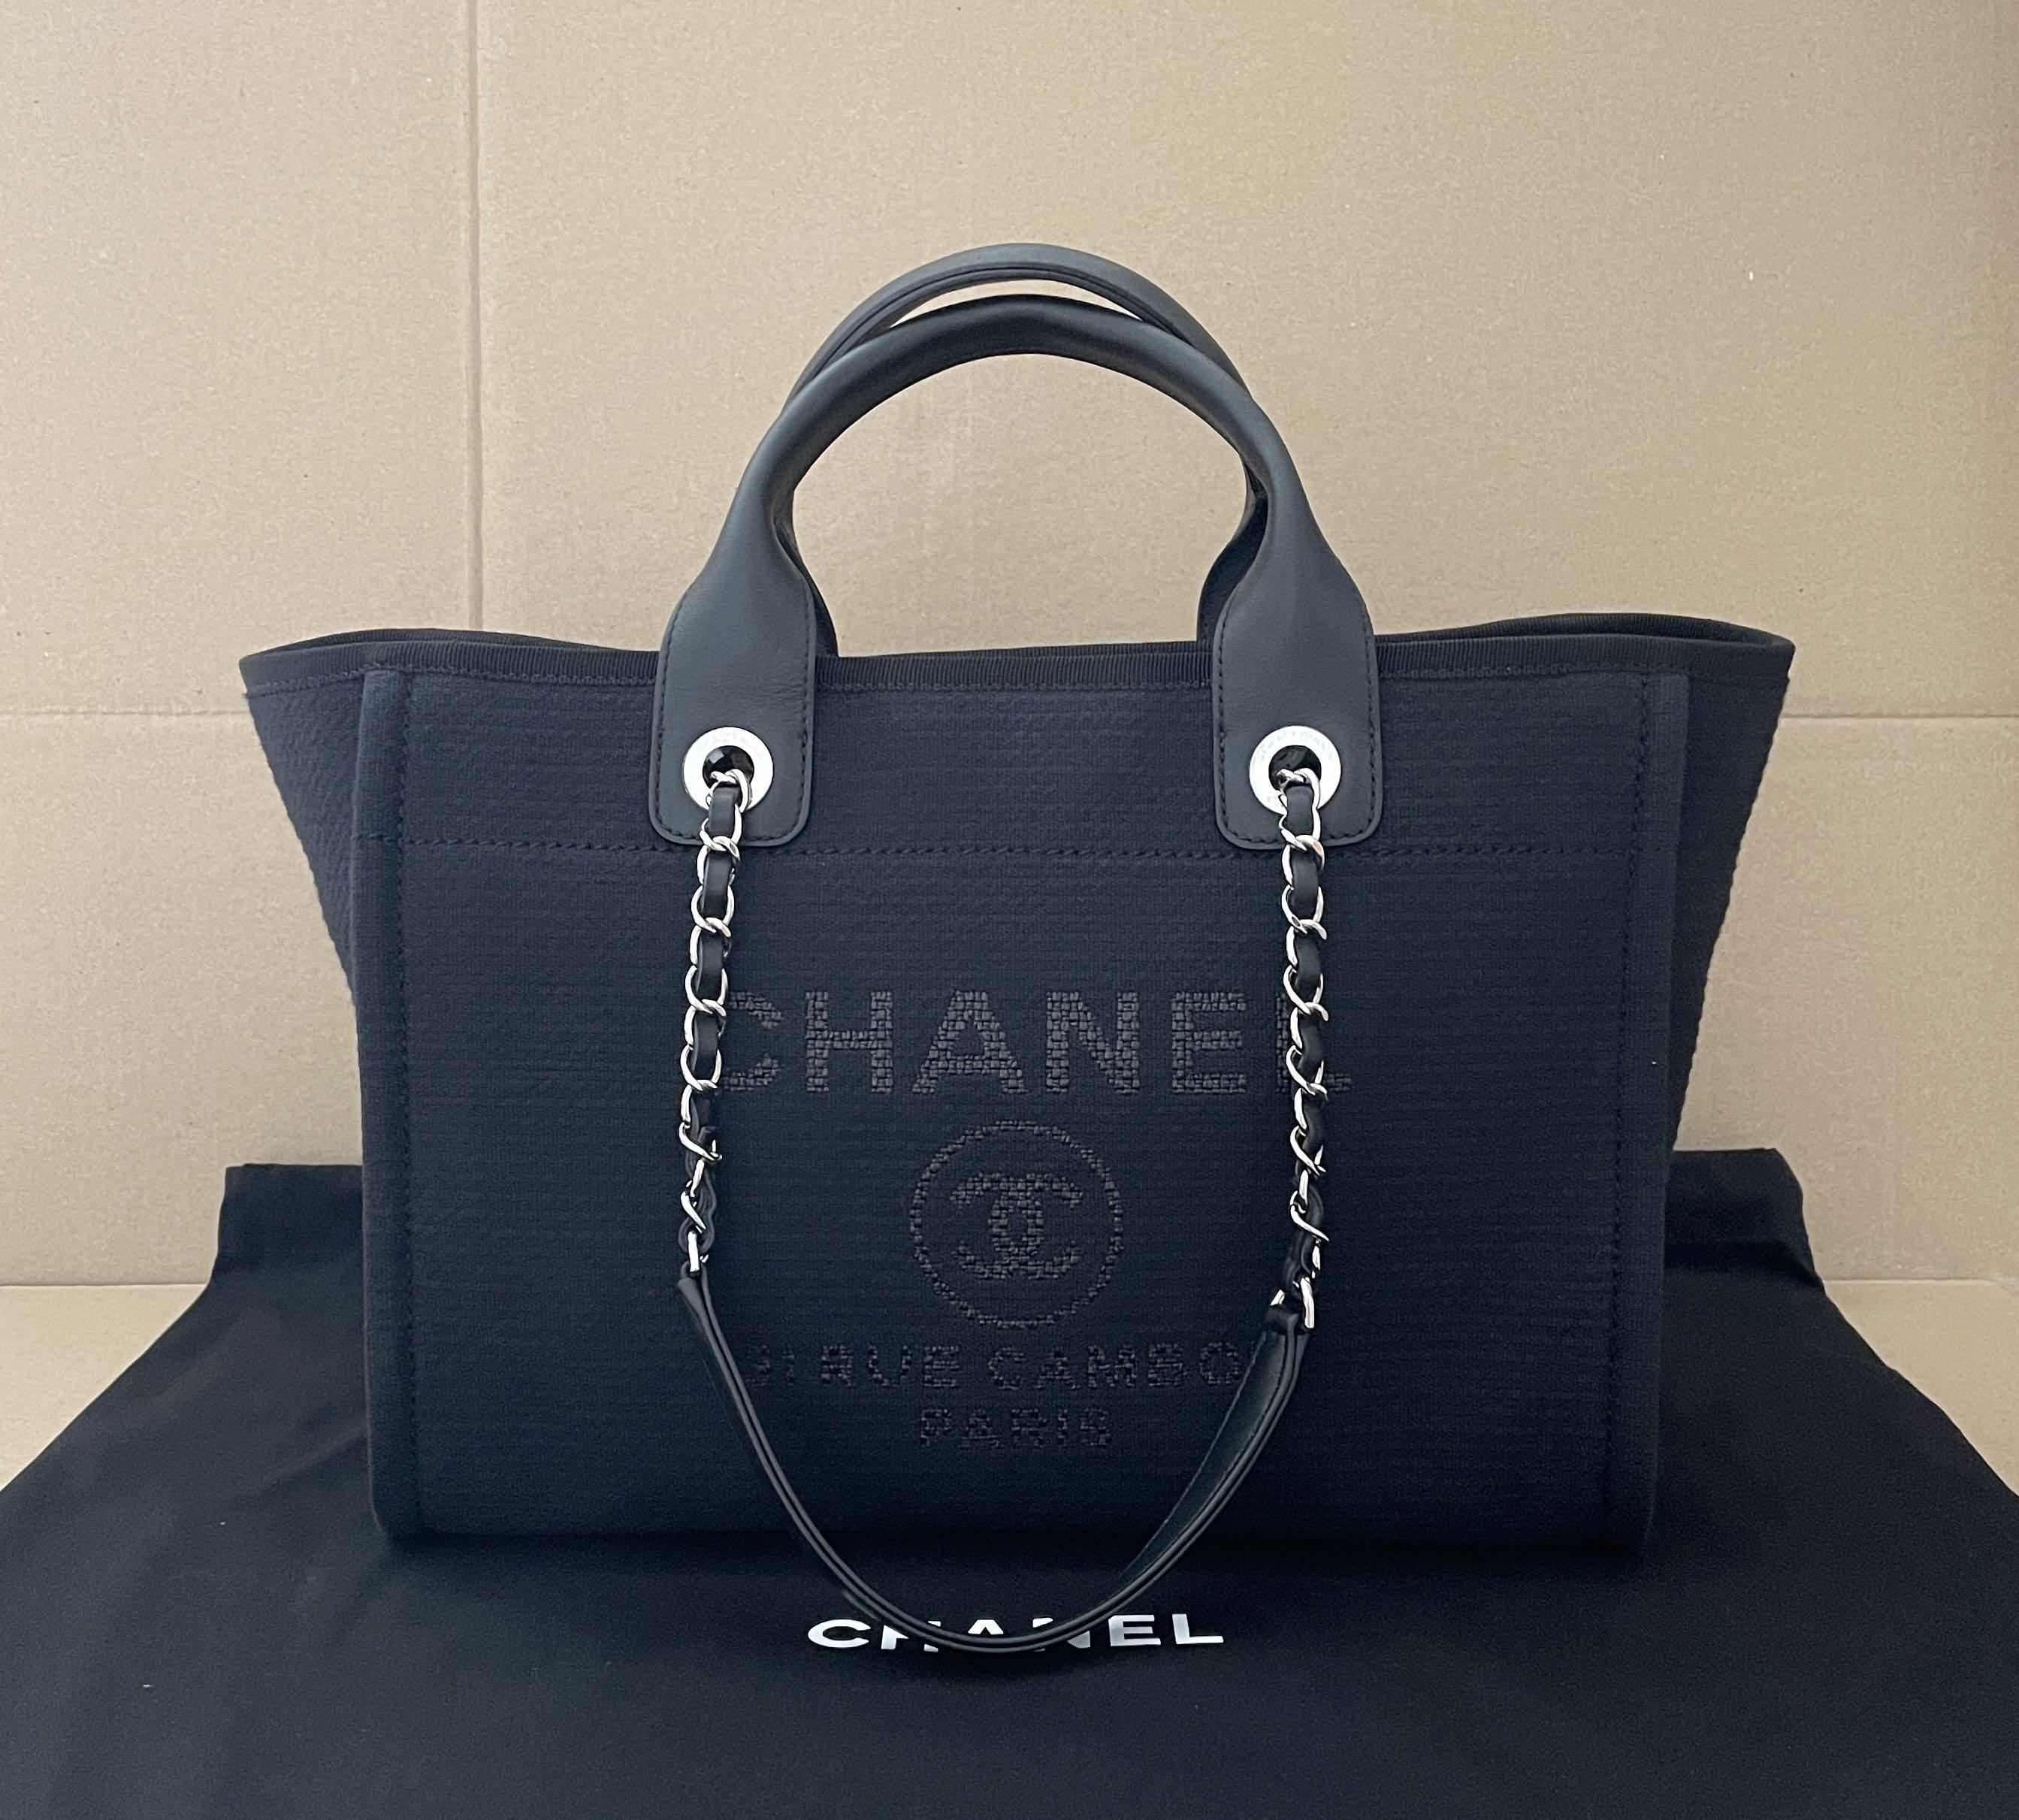 22s Chanel Deauville Small Tote Bag